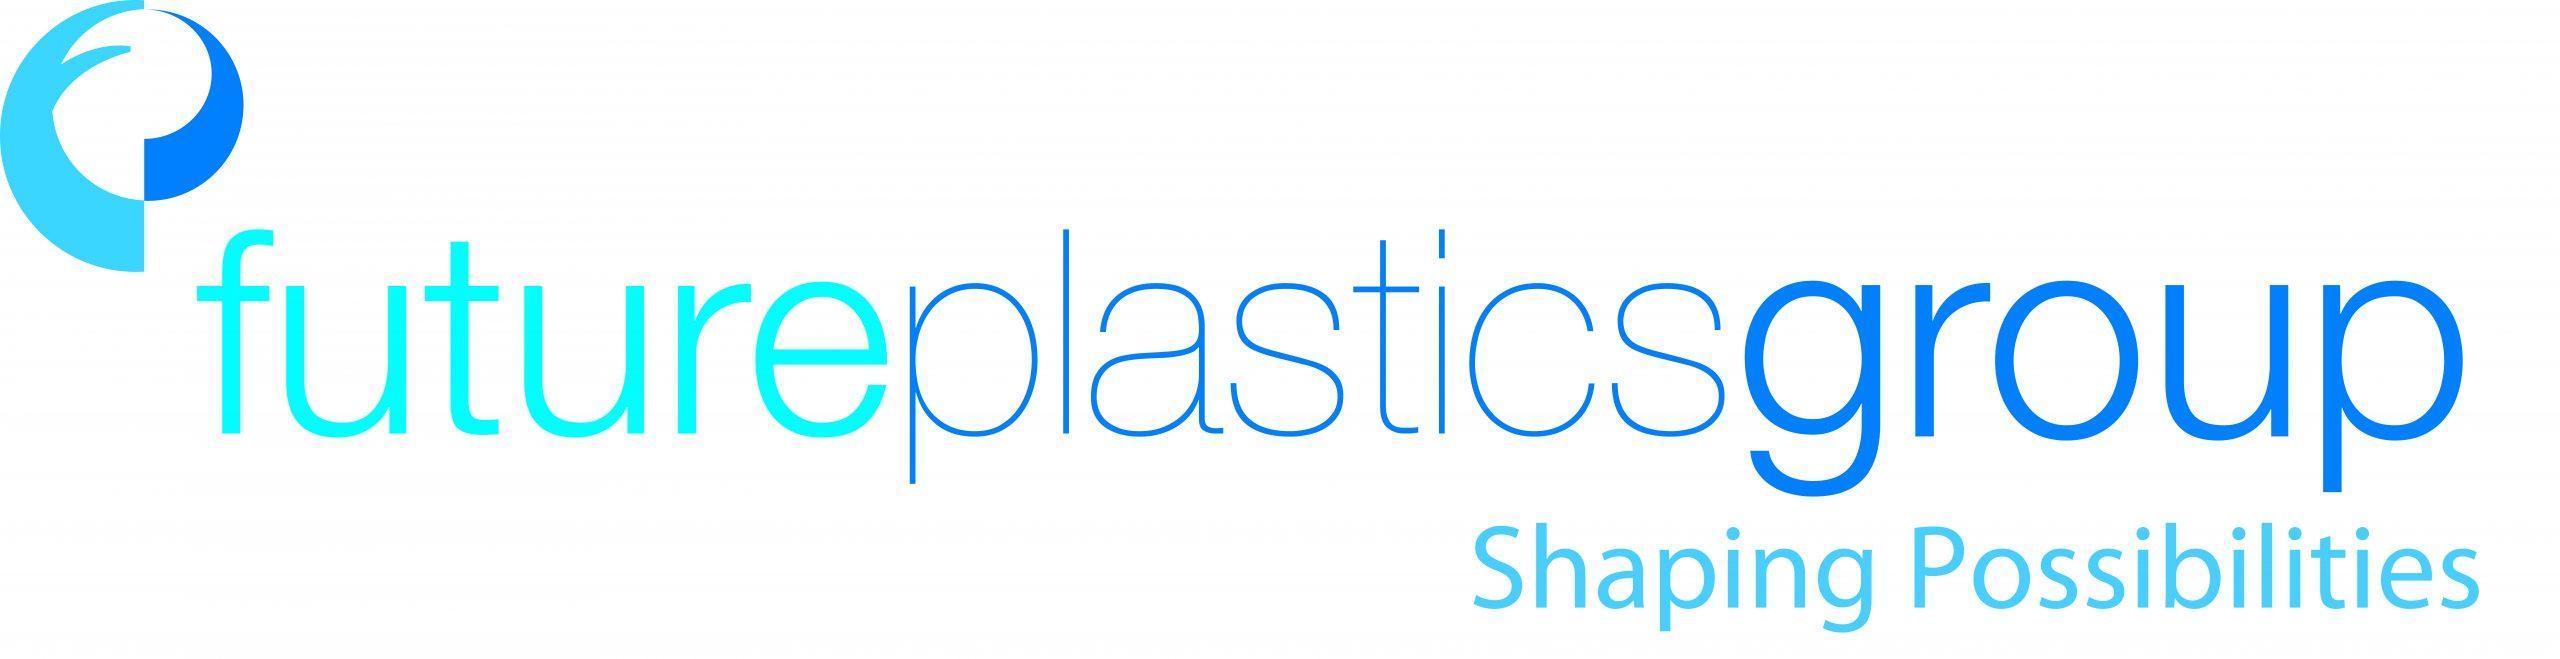 Logo Future Plastics Ltd